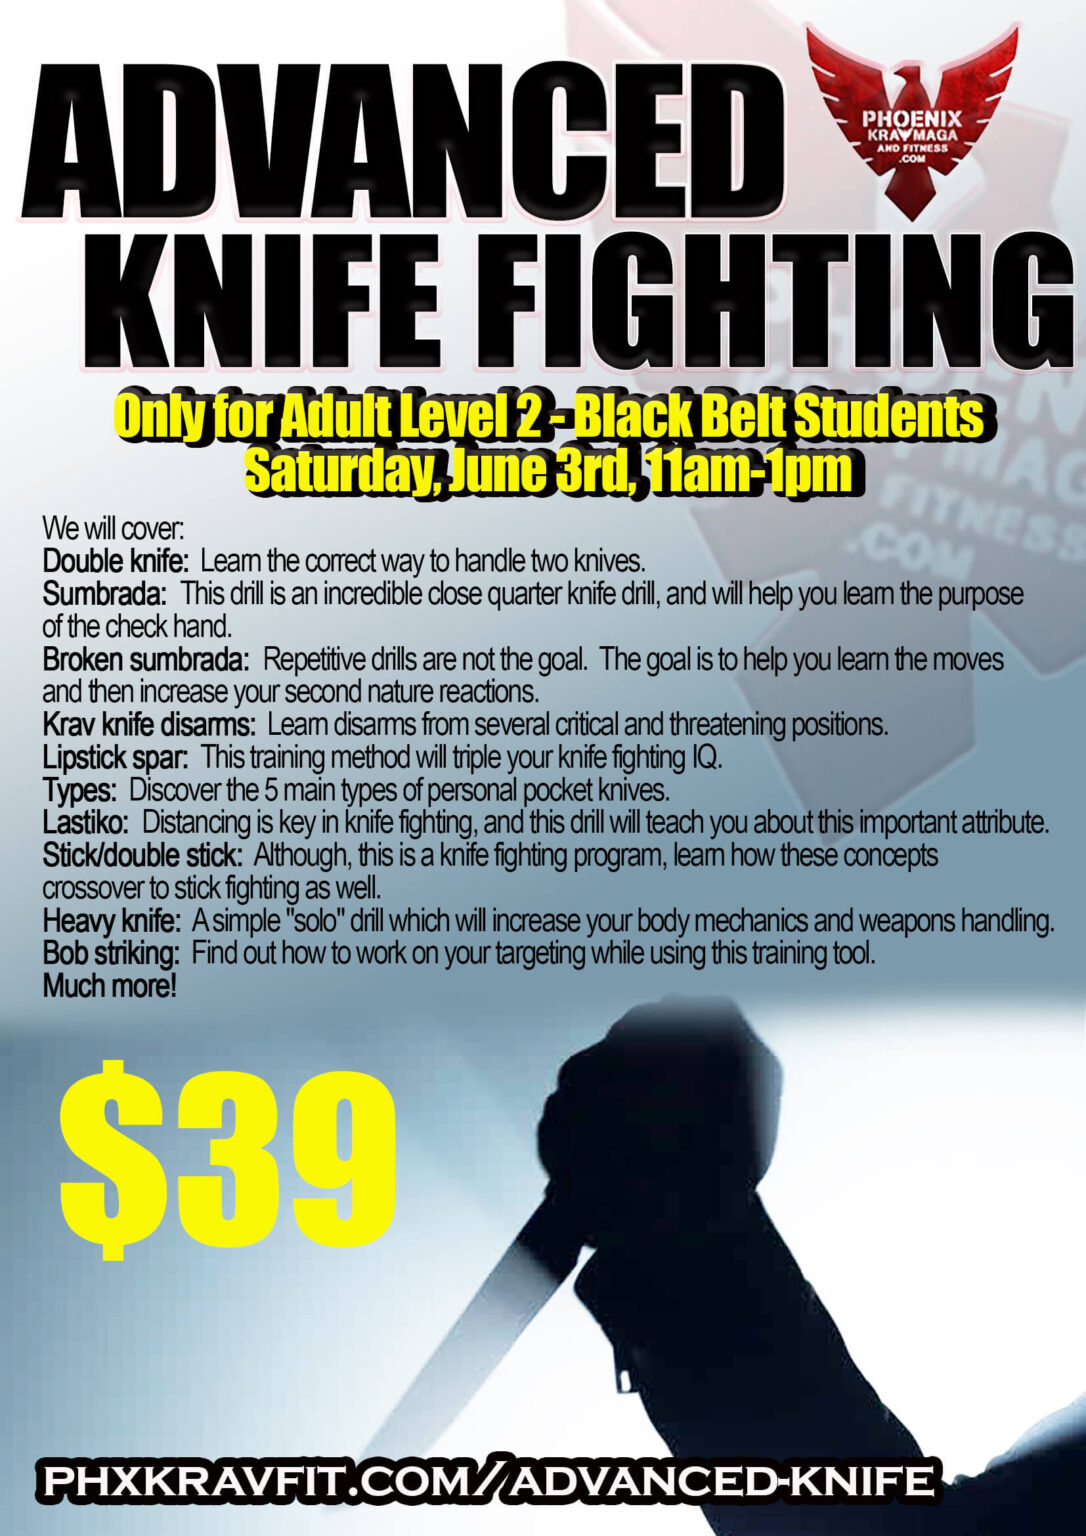 Phoenix Krav Maga Advanced Knife Fighting / Self Defense Seminar